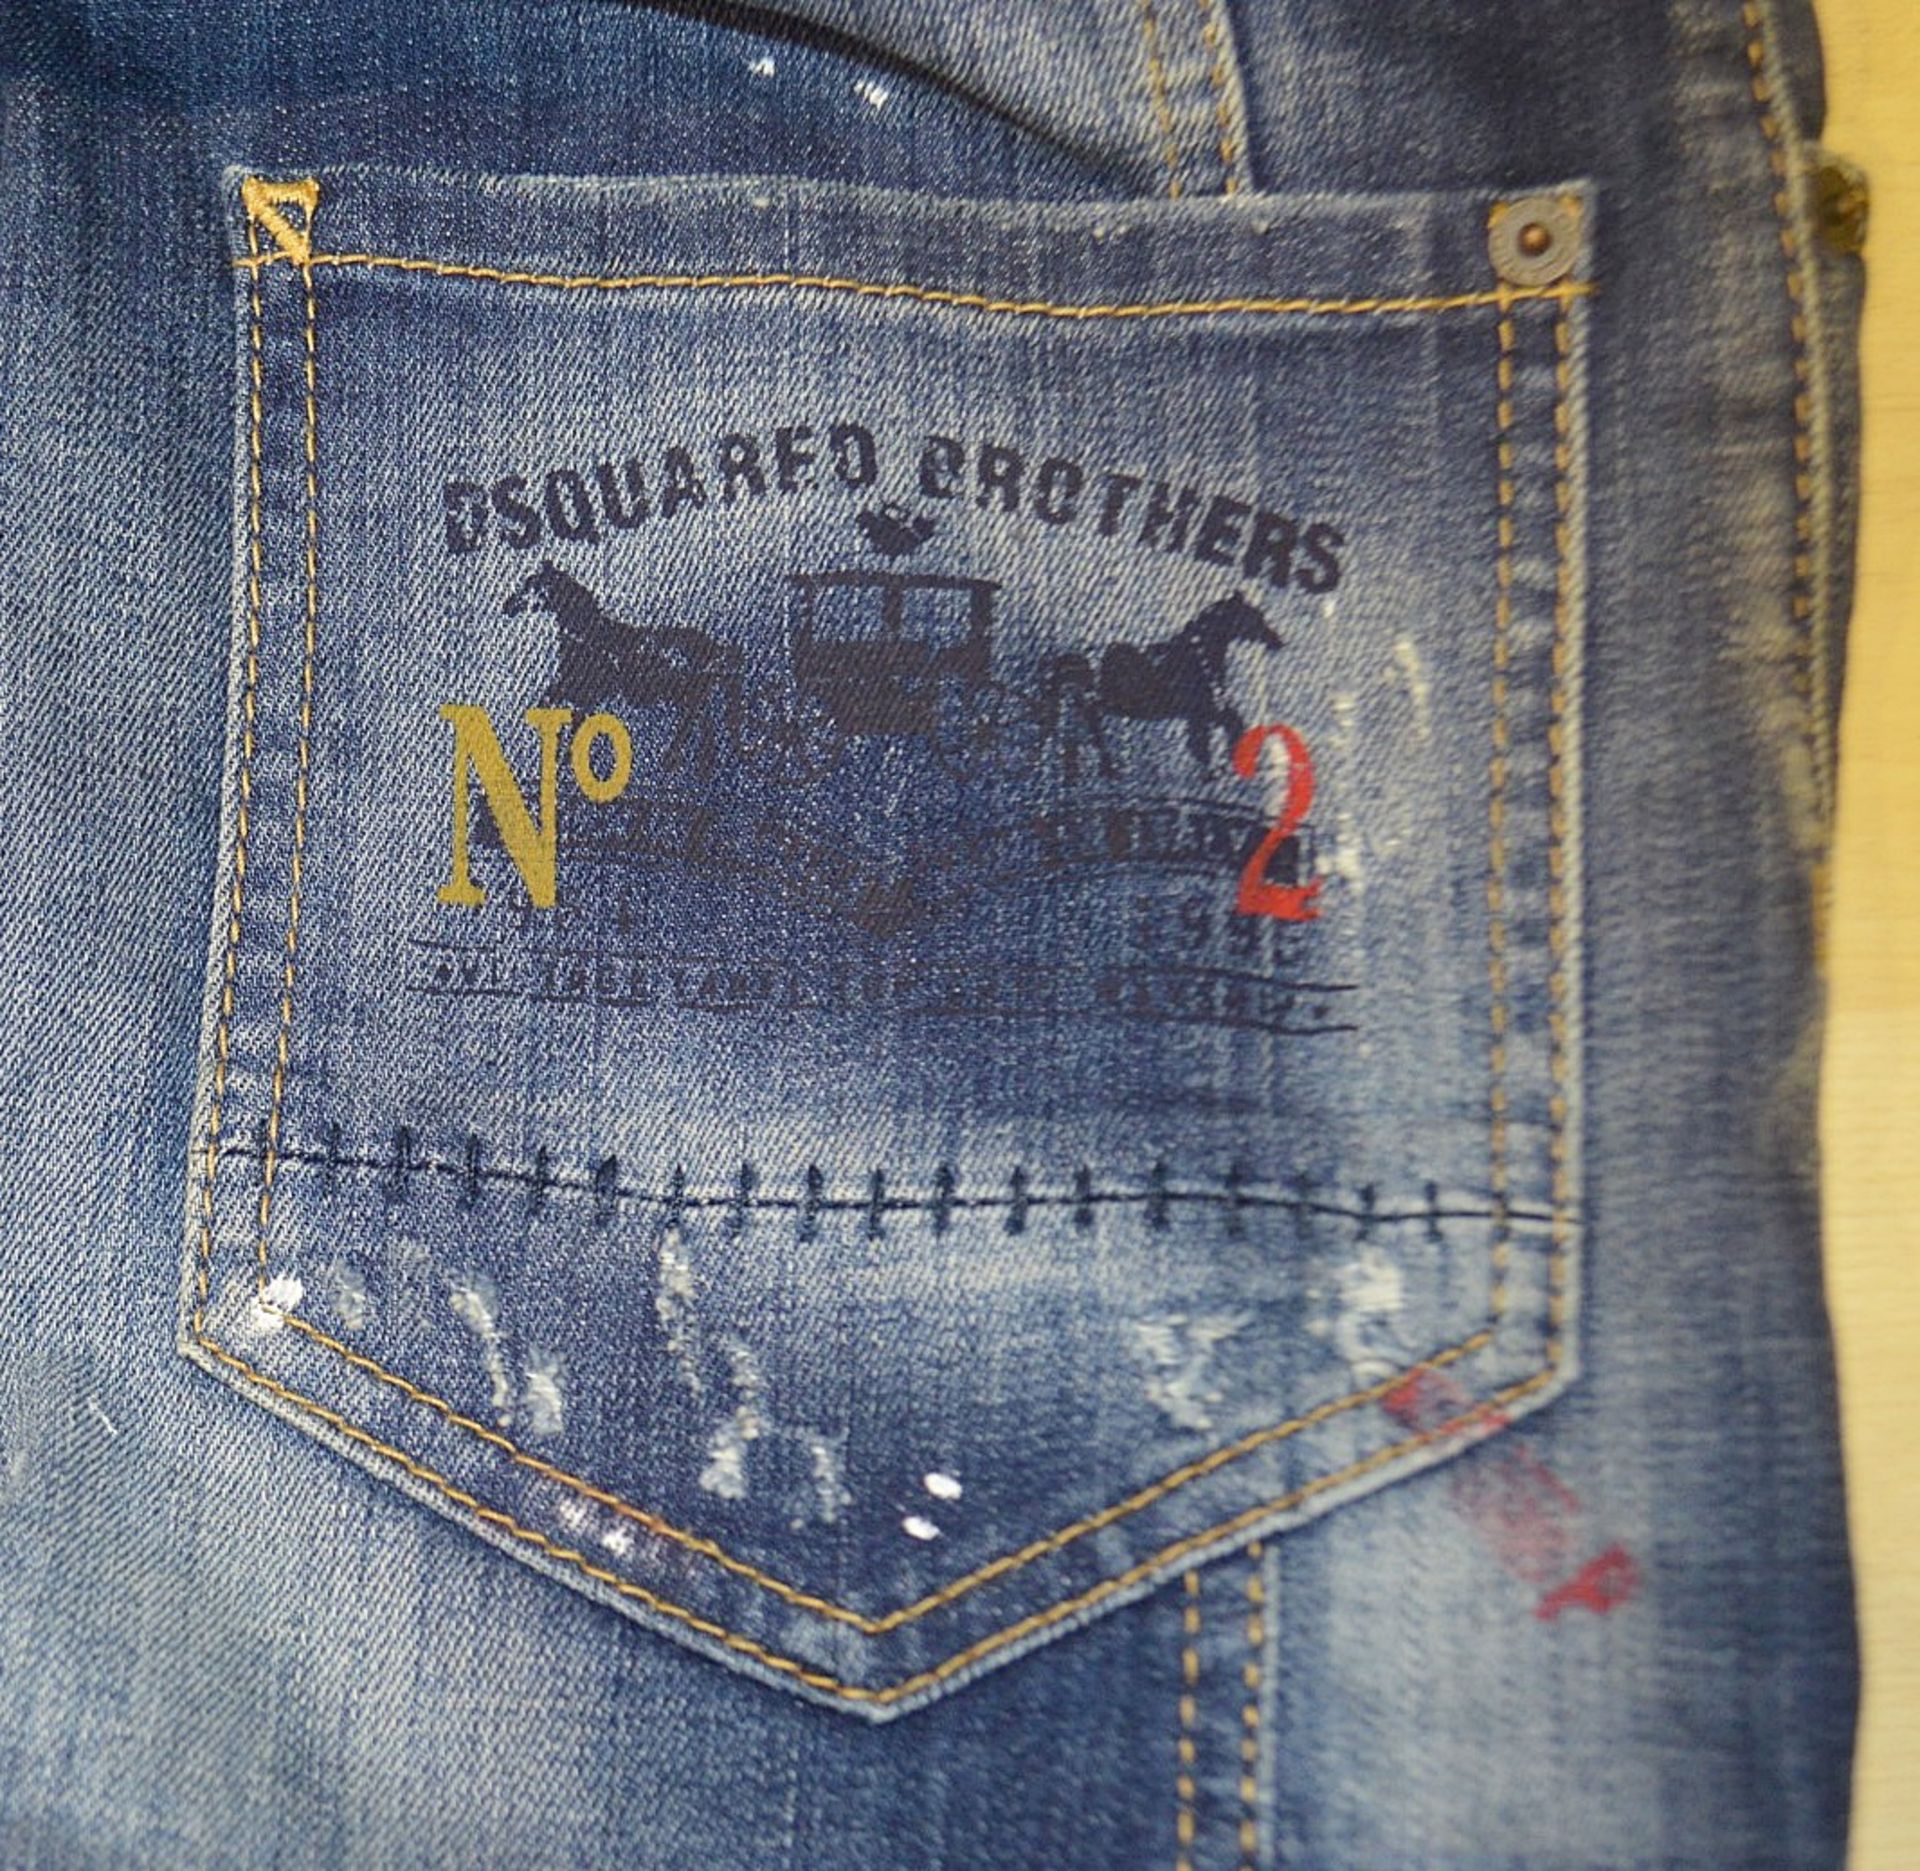 1 x Pair Of Men's Genuine Dsquared2 Designer Distressed Jeans In Dark Blue - Size: UK32 / ITALY 48 - Image 5 of 8